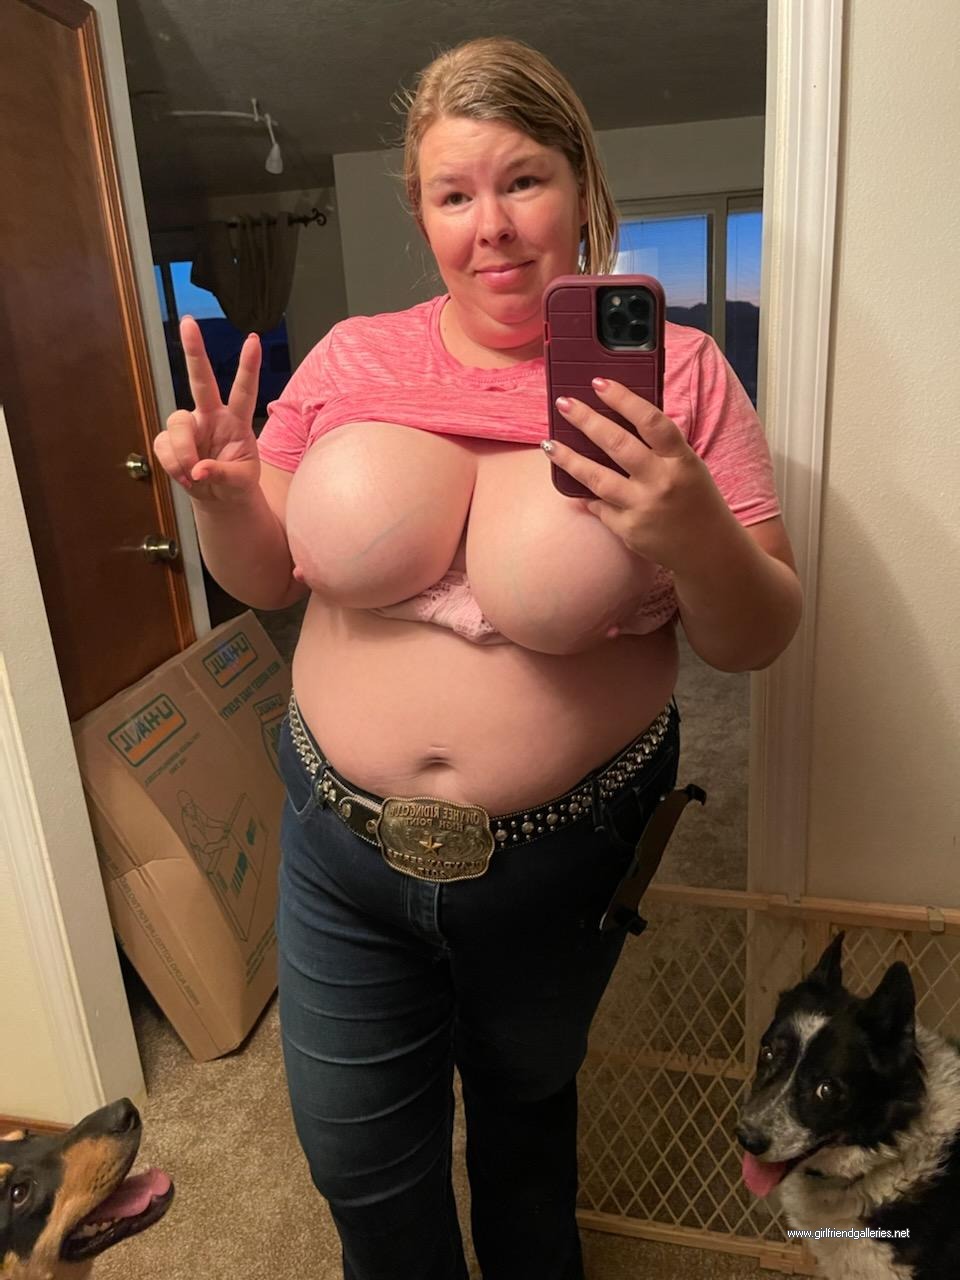 Tits anyone?